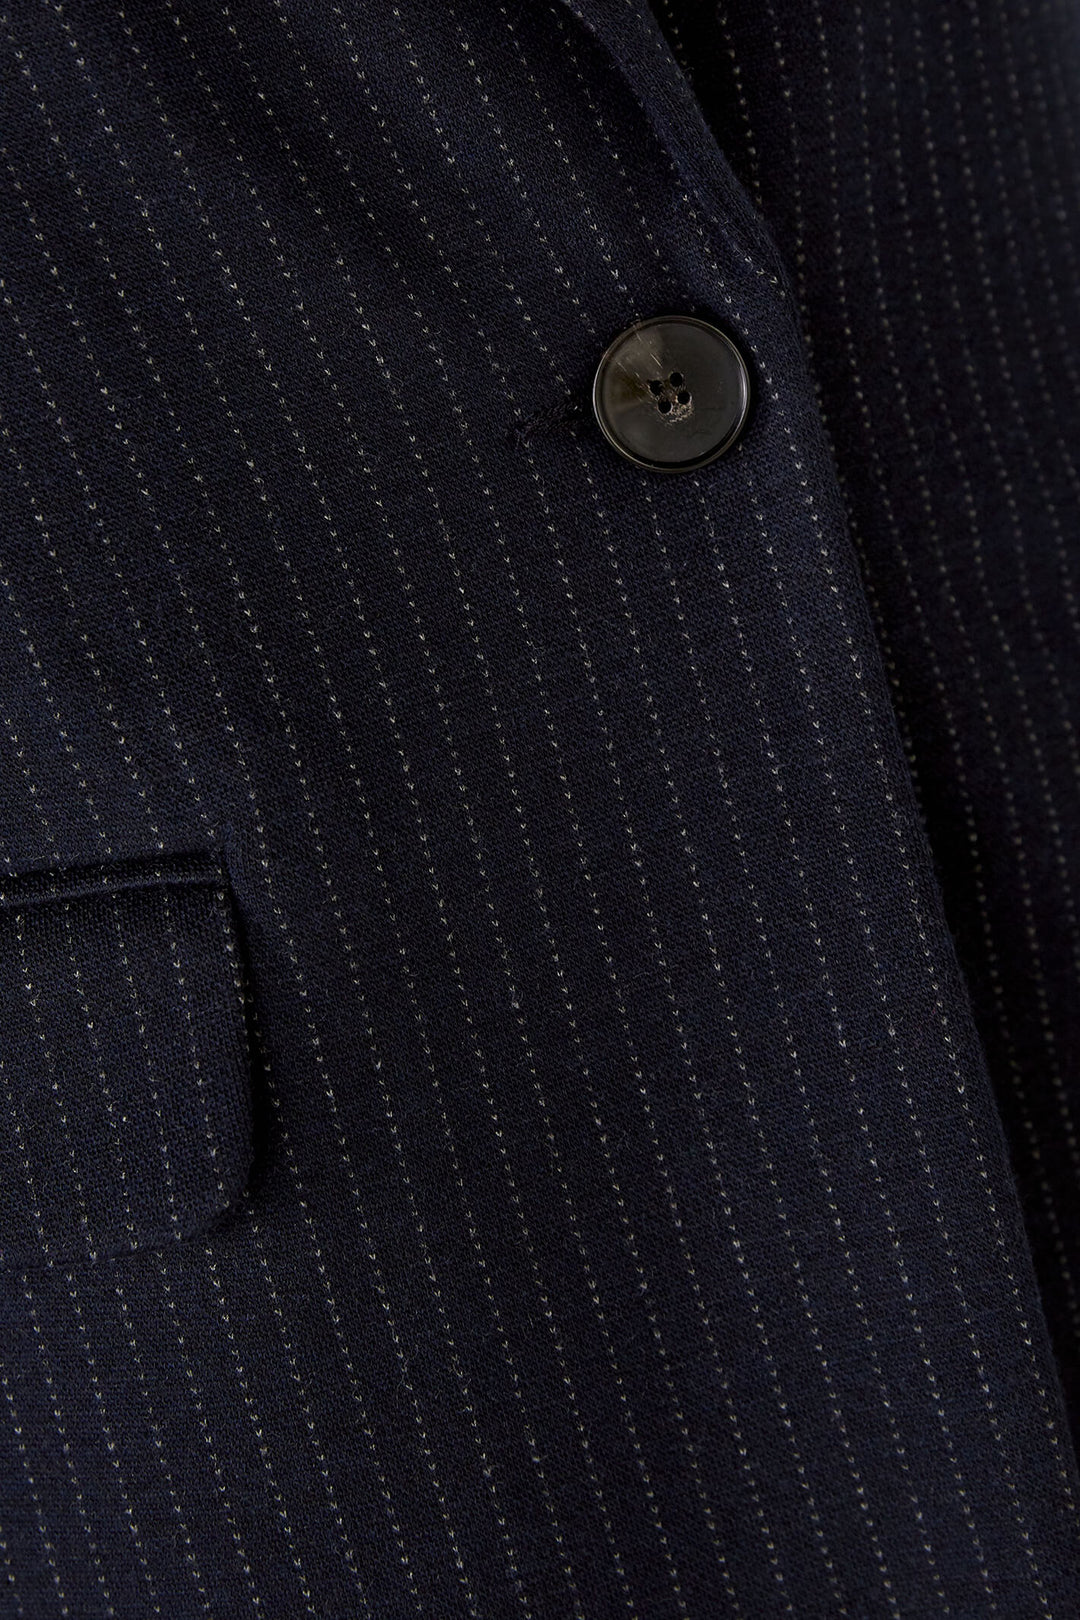 Oui 79453 Navy Pinstripe One Button Blazer Jacket - Olivia Grace Fashion